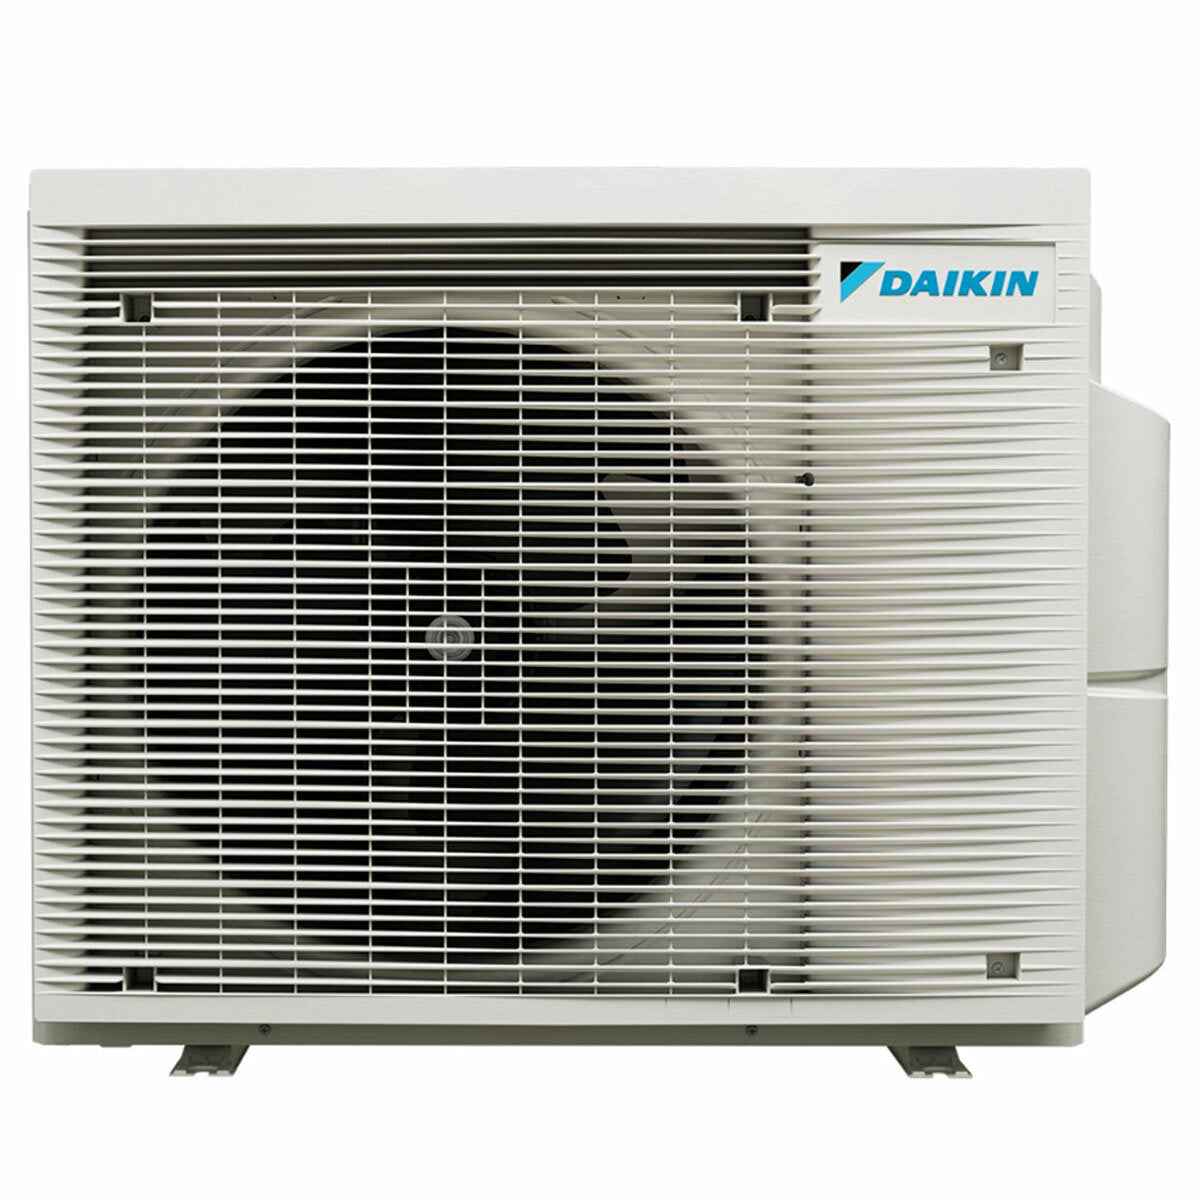 Daikin Mini Sky FDXM-F9 ducted air conditioner penta split 9000+9000+9000+9000+12000 BTU inverter A++ external 9 kW